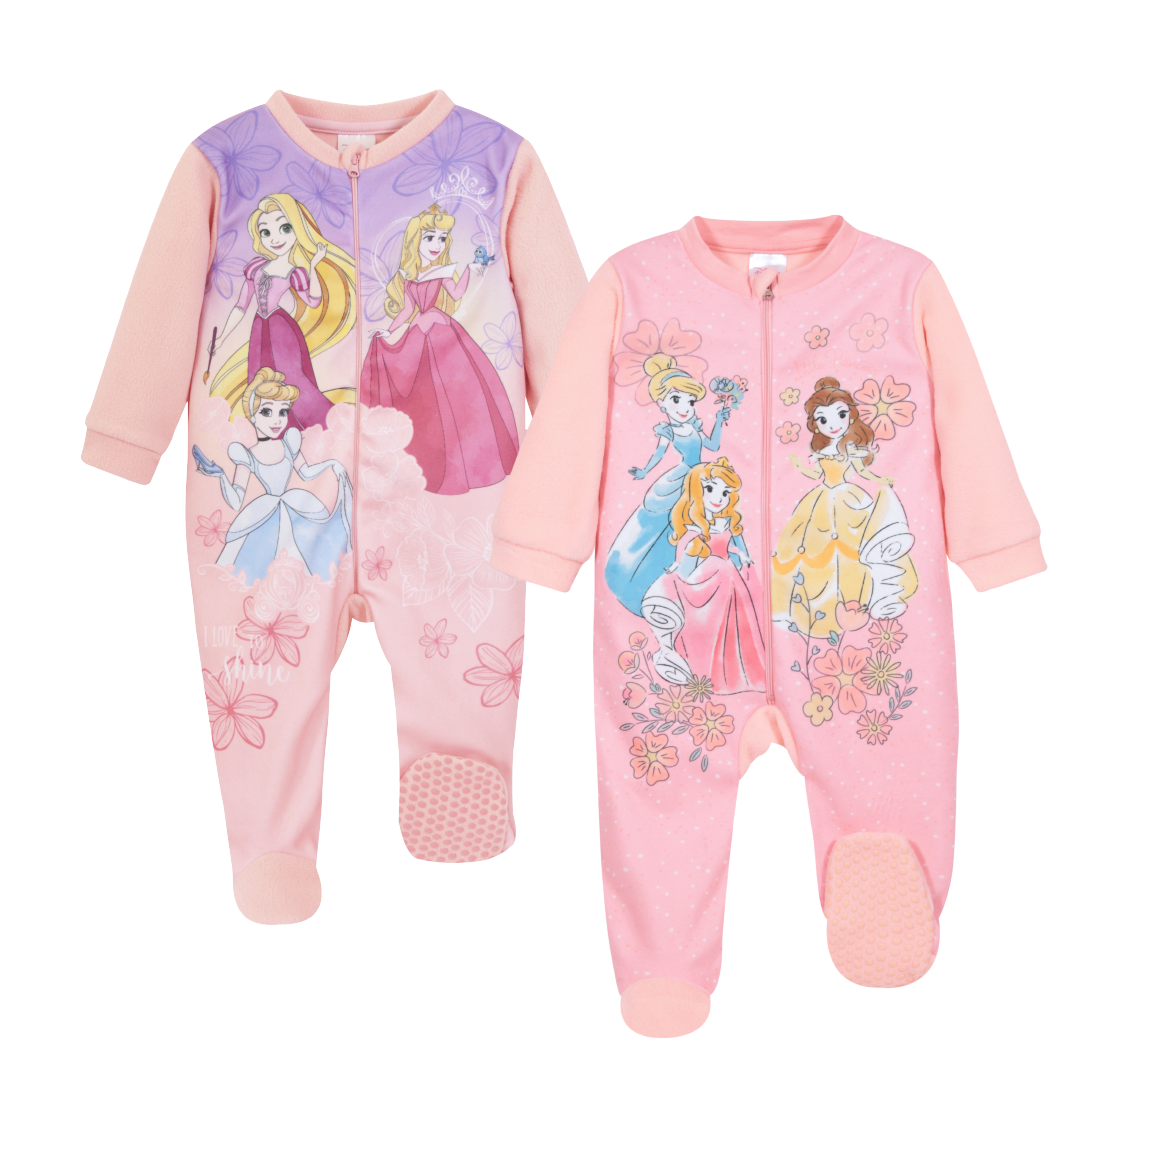 Pack 2 Pijama Bebé Niña Entero Polar Rosa Disney - H2O Wear